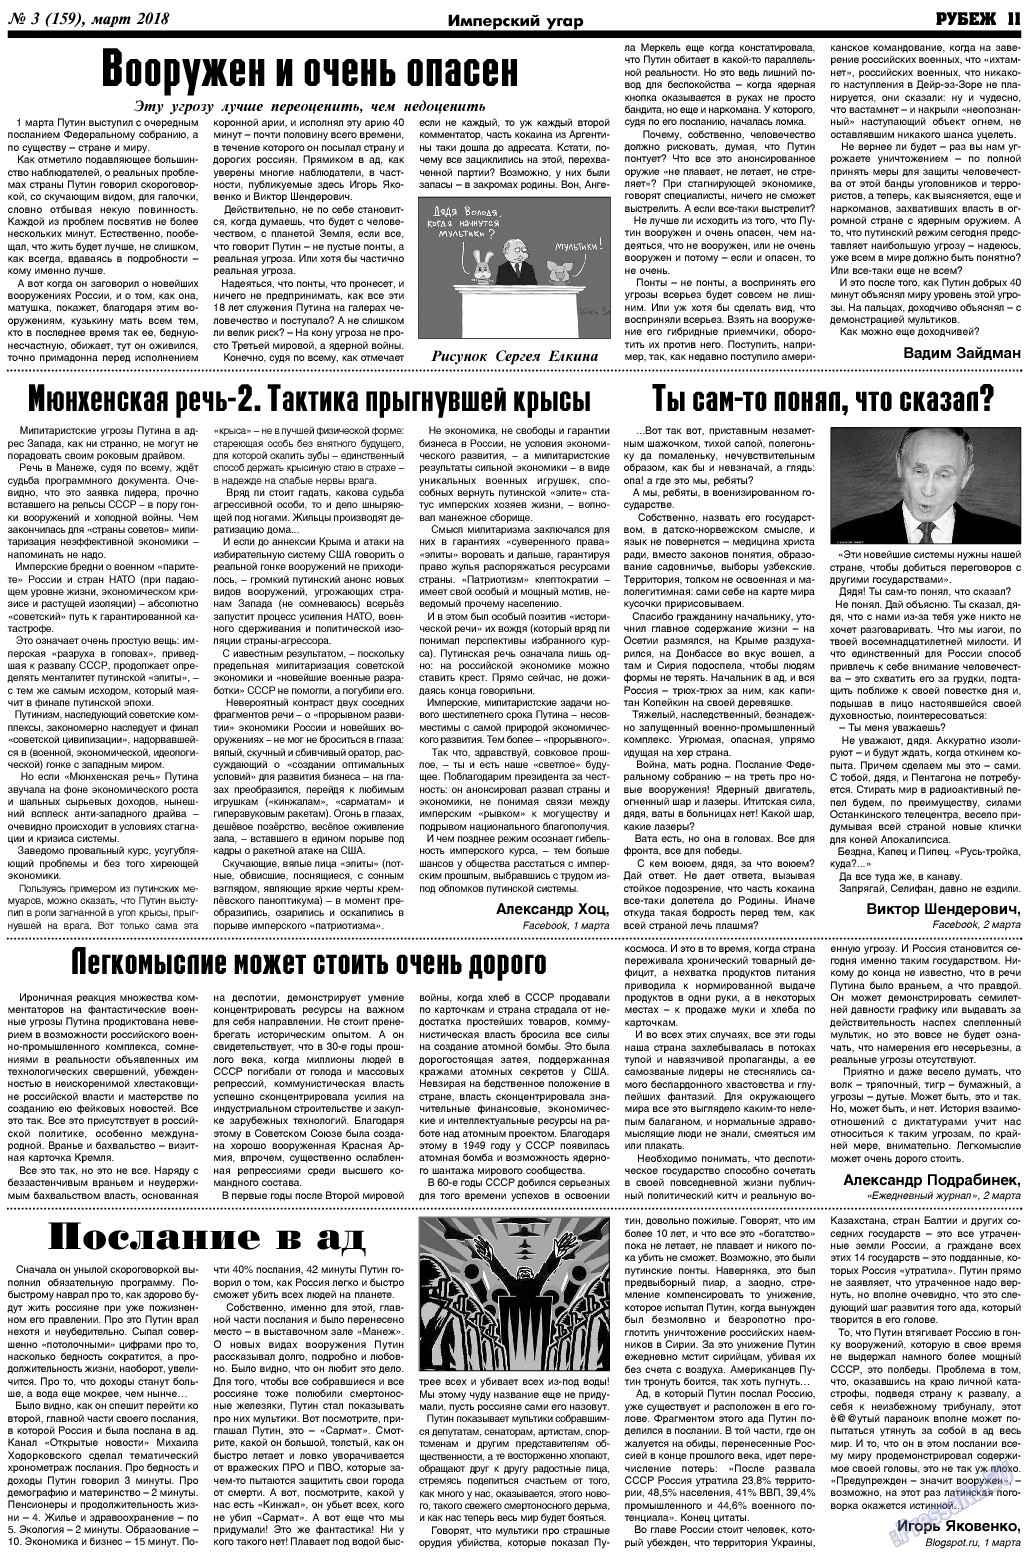 Рубеж, газета. 2018 №3 стр.11